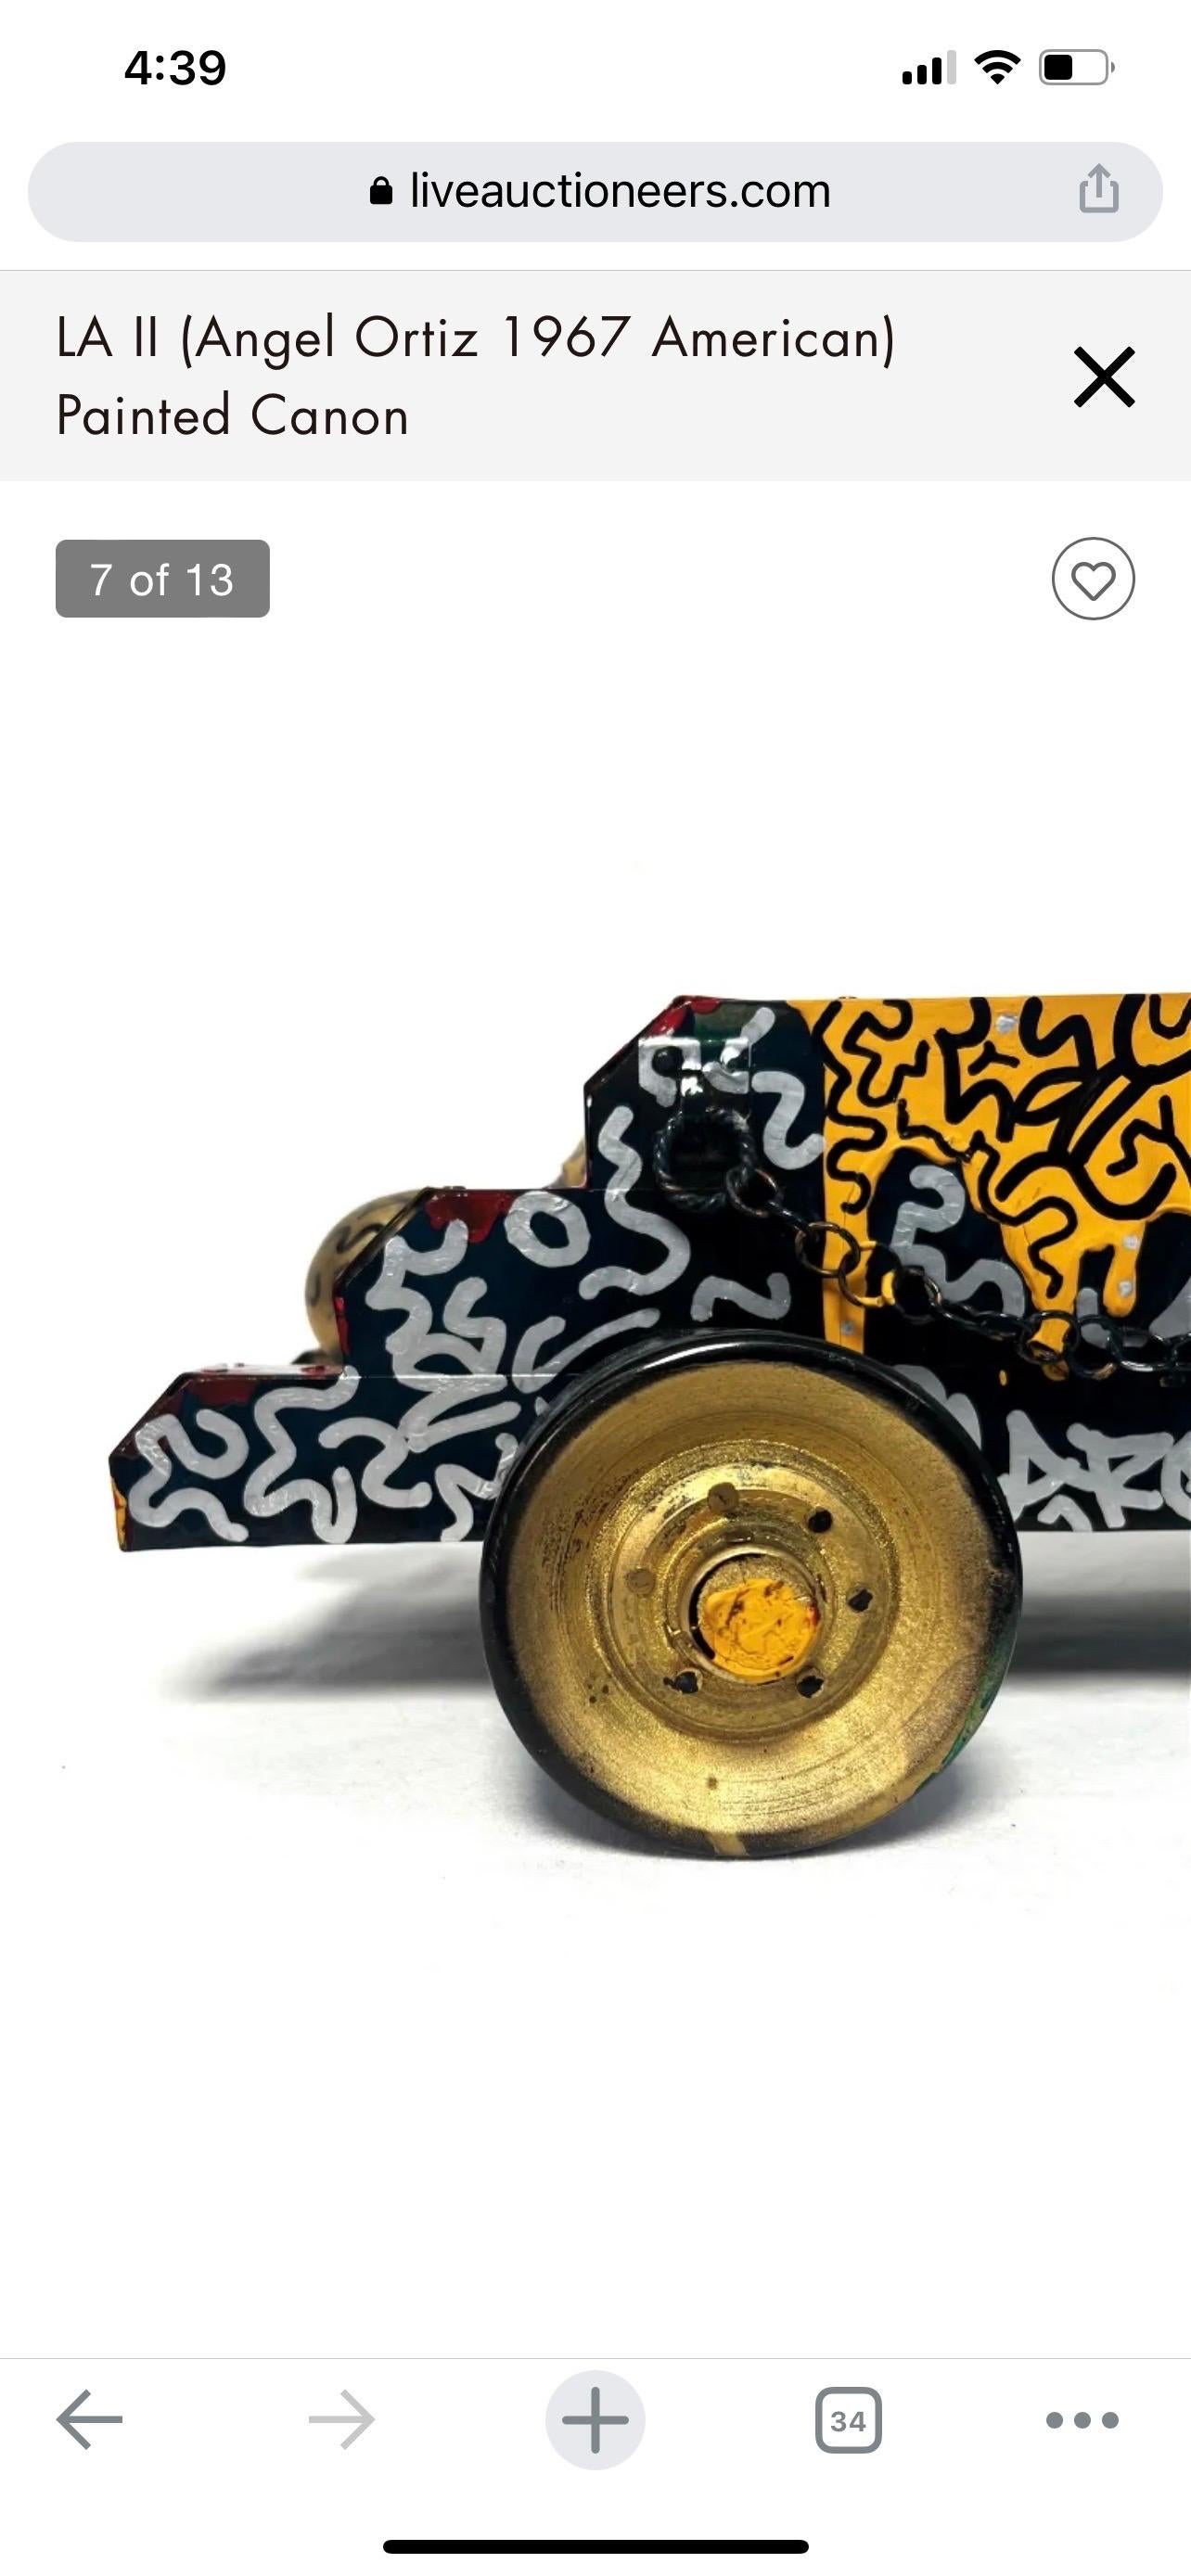 Graffiti Painting Cannon Gun LA2 Keith Haring Collaborator, Street Art Sculpture 1